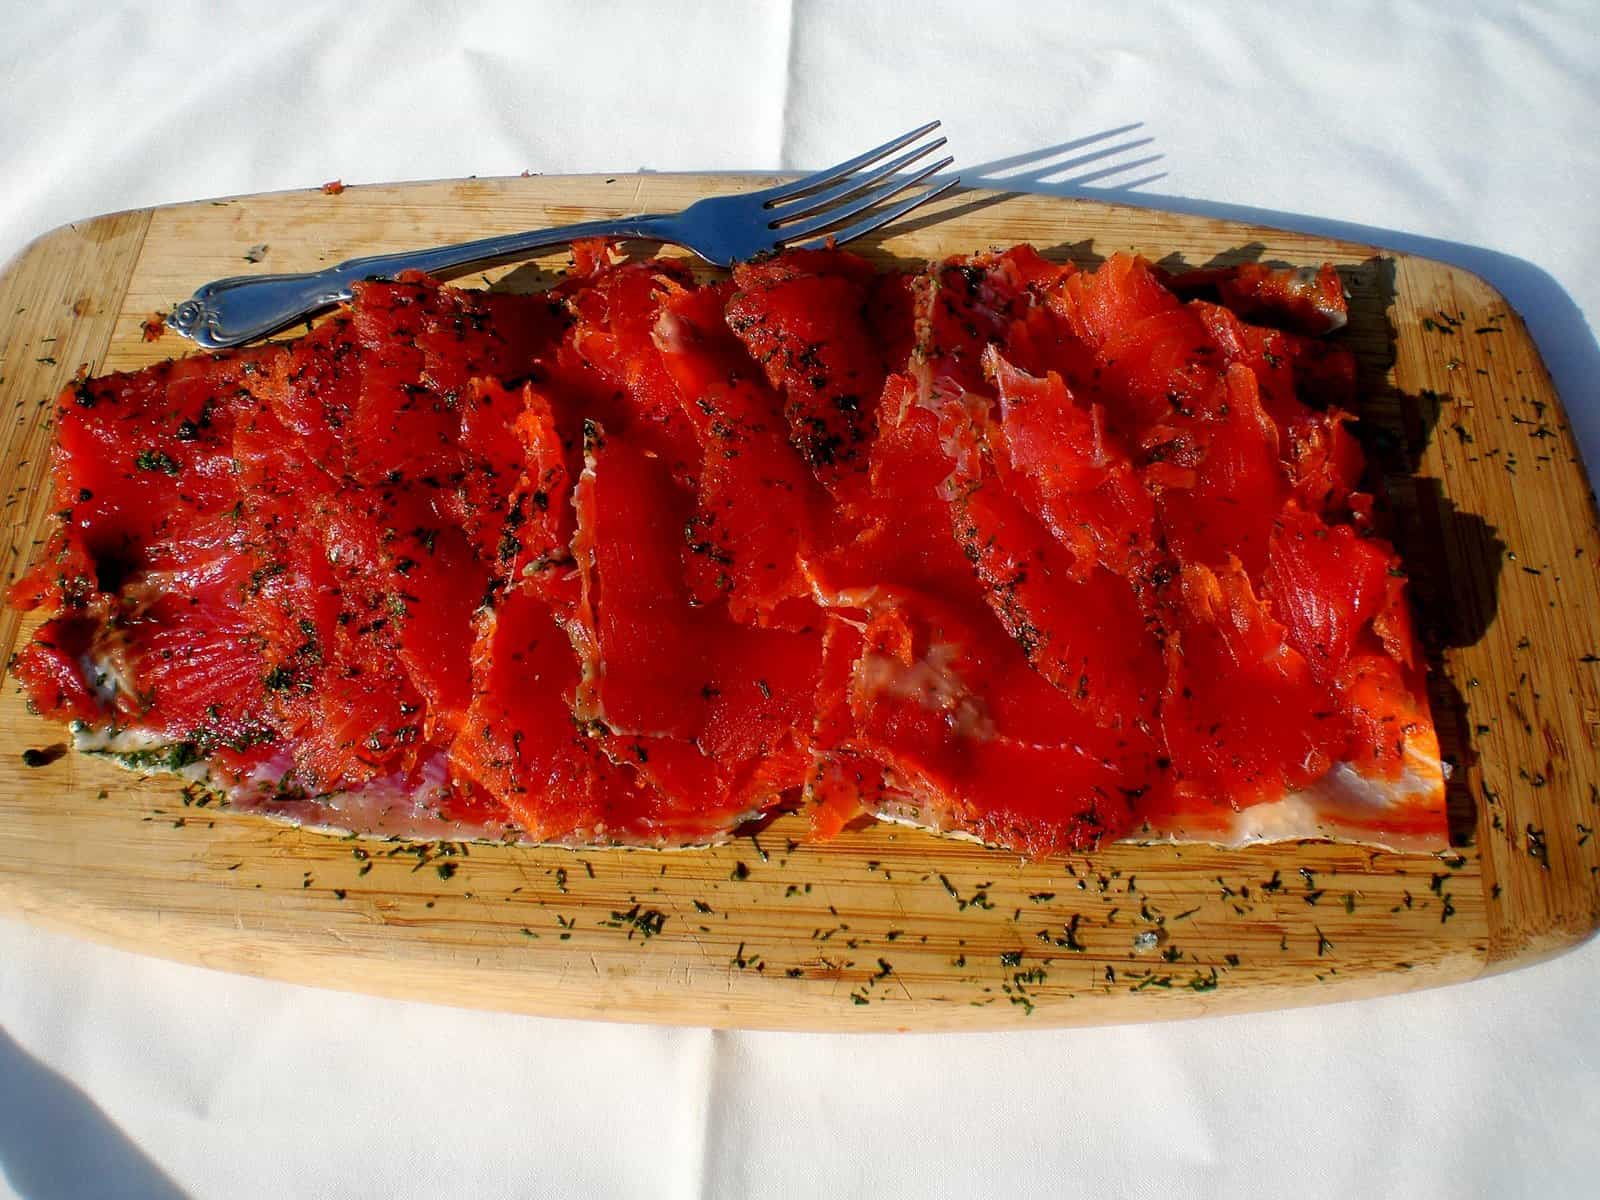 Red salmon on a cutting board.